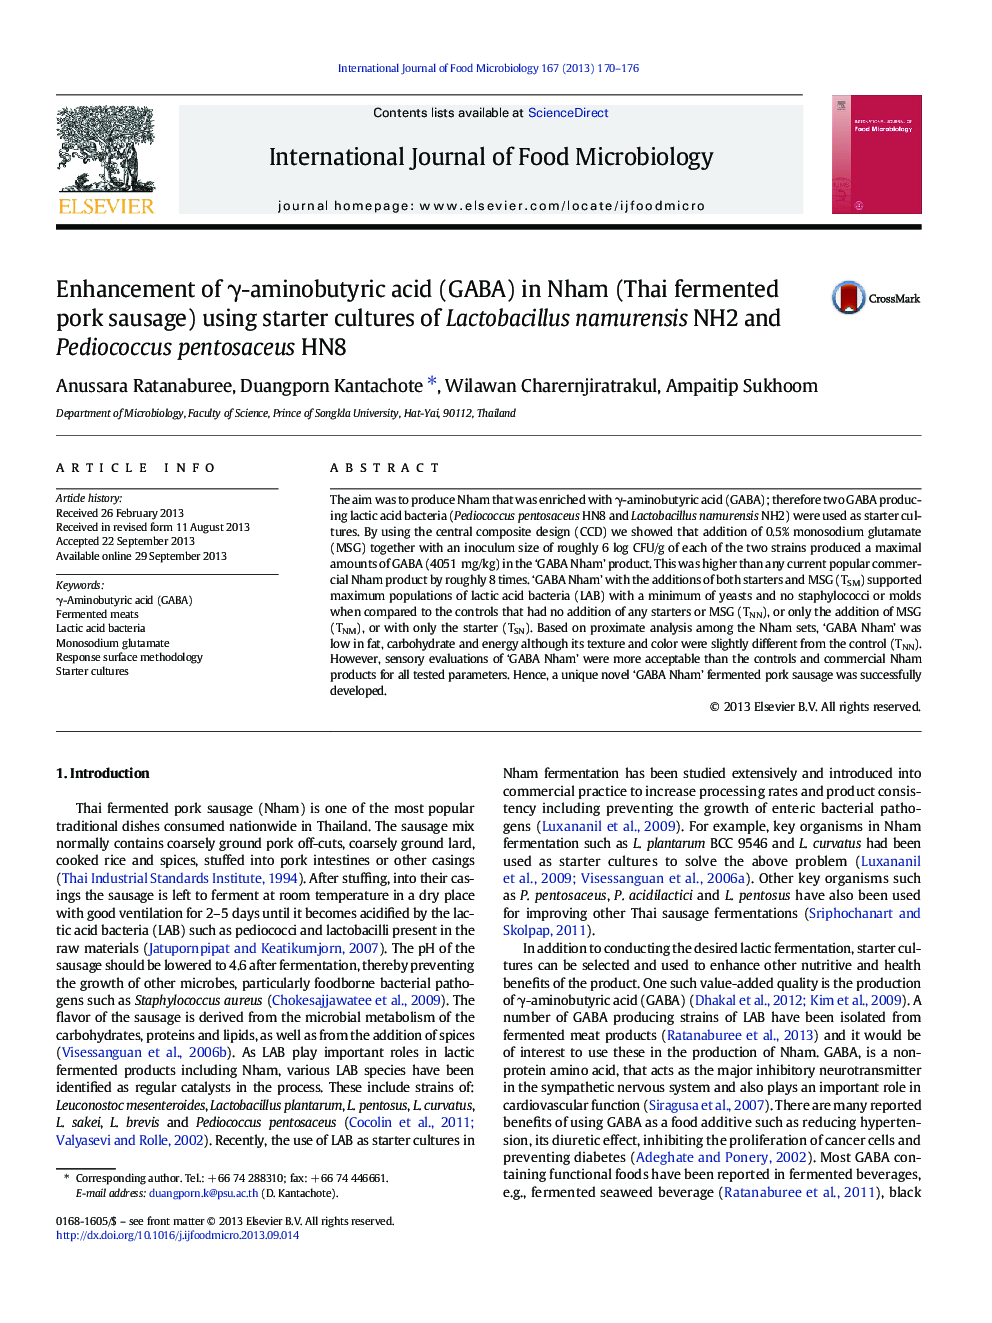 Enhancement of γ-aminobutyric acid (GABA) in Nham (Thai fermented pork sausage) using starter cultures of Lactobacillus namurensis NH2 and Pediococcus pentosaceus HN8